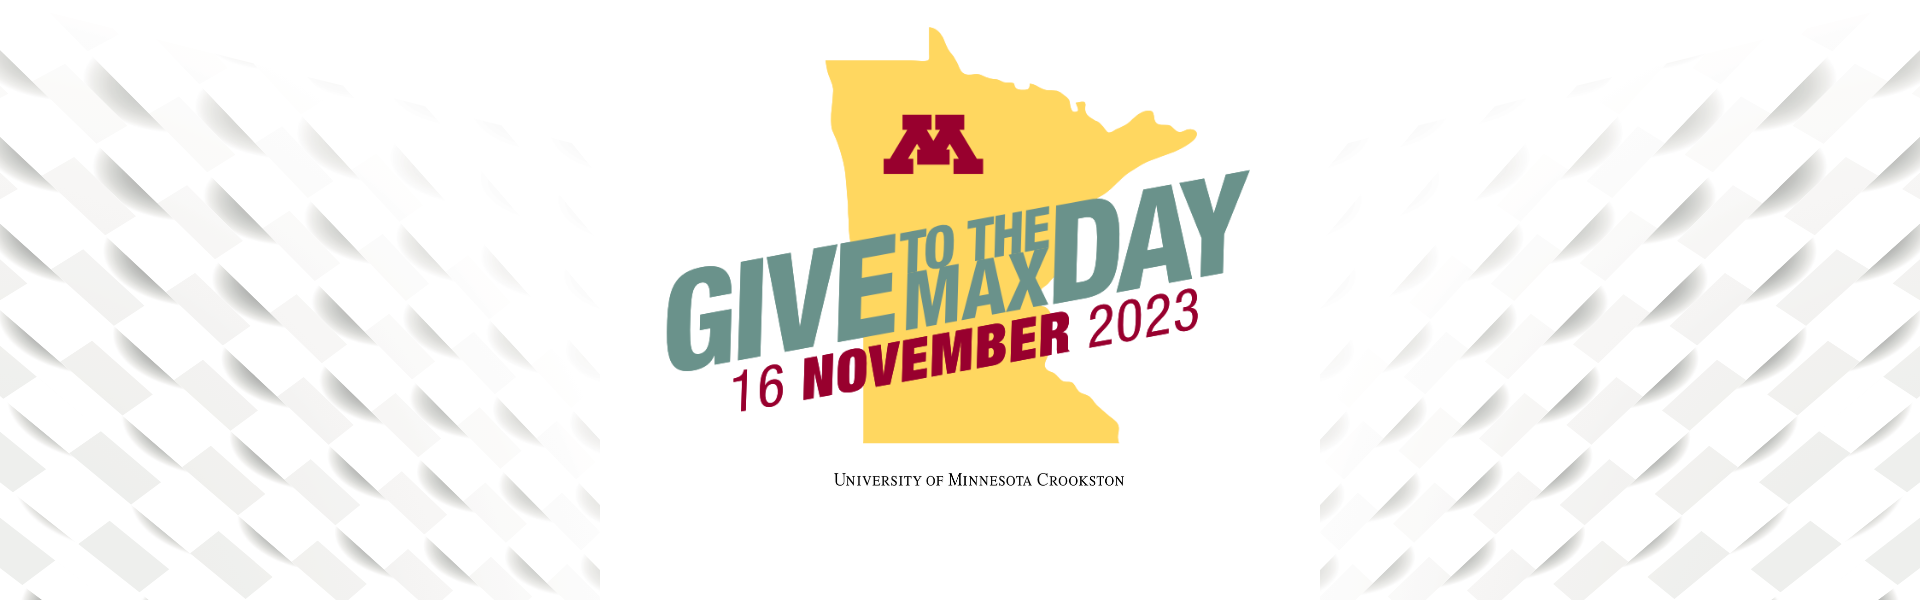 Give to the Max Day November 16, 2023 - University of Minnesota Crookston